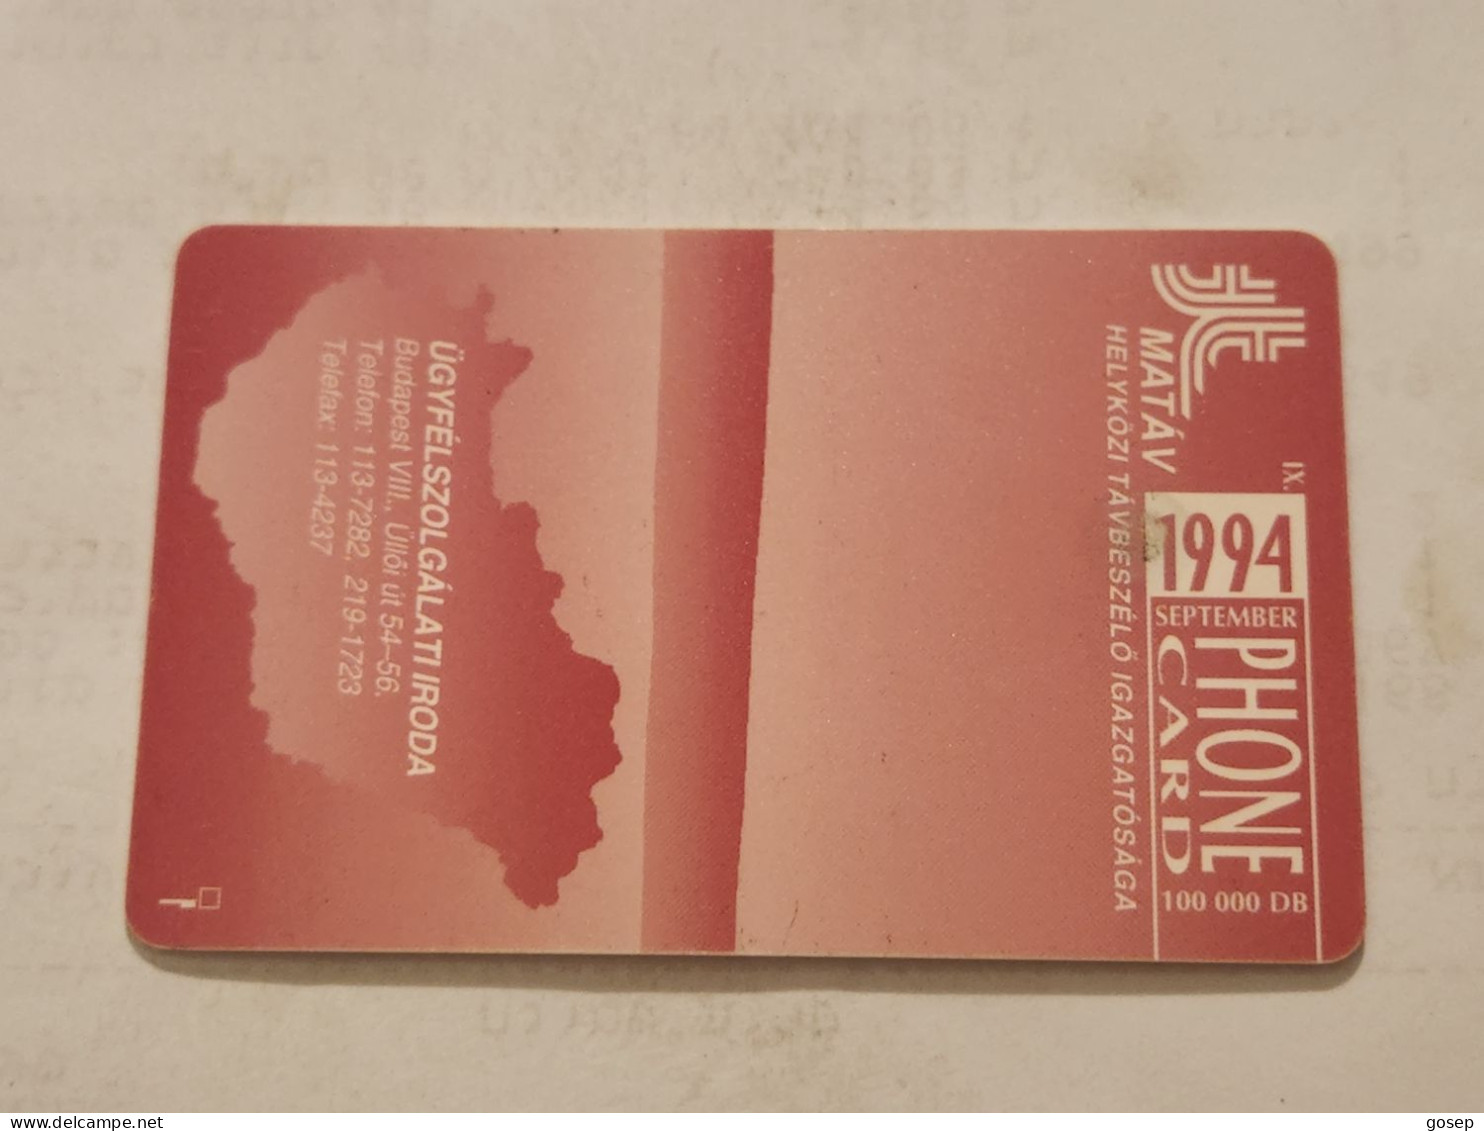 HUNGARY-(HU-P-1994-08B)-HTI-(194)(50units)(07/1994)(tirage-100.000)USED CARD+1card Prepiad Free - Hungary